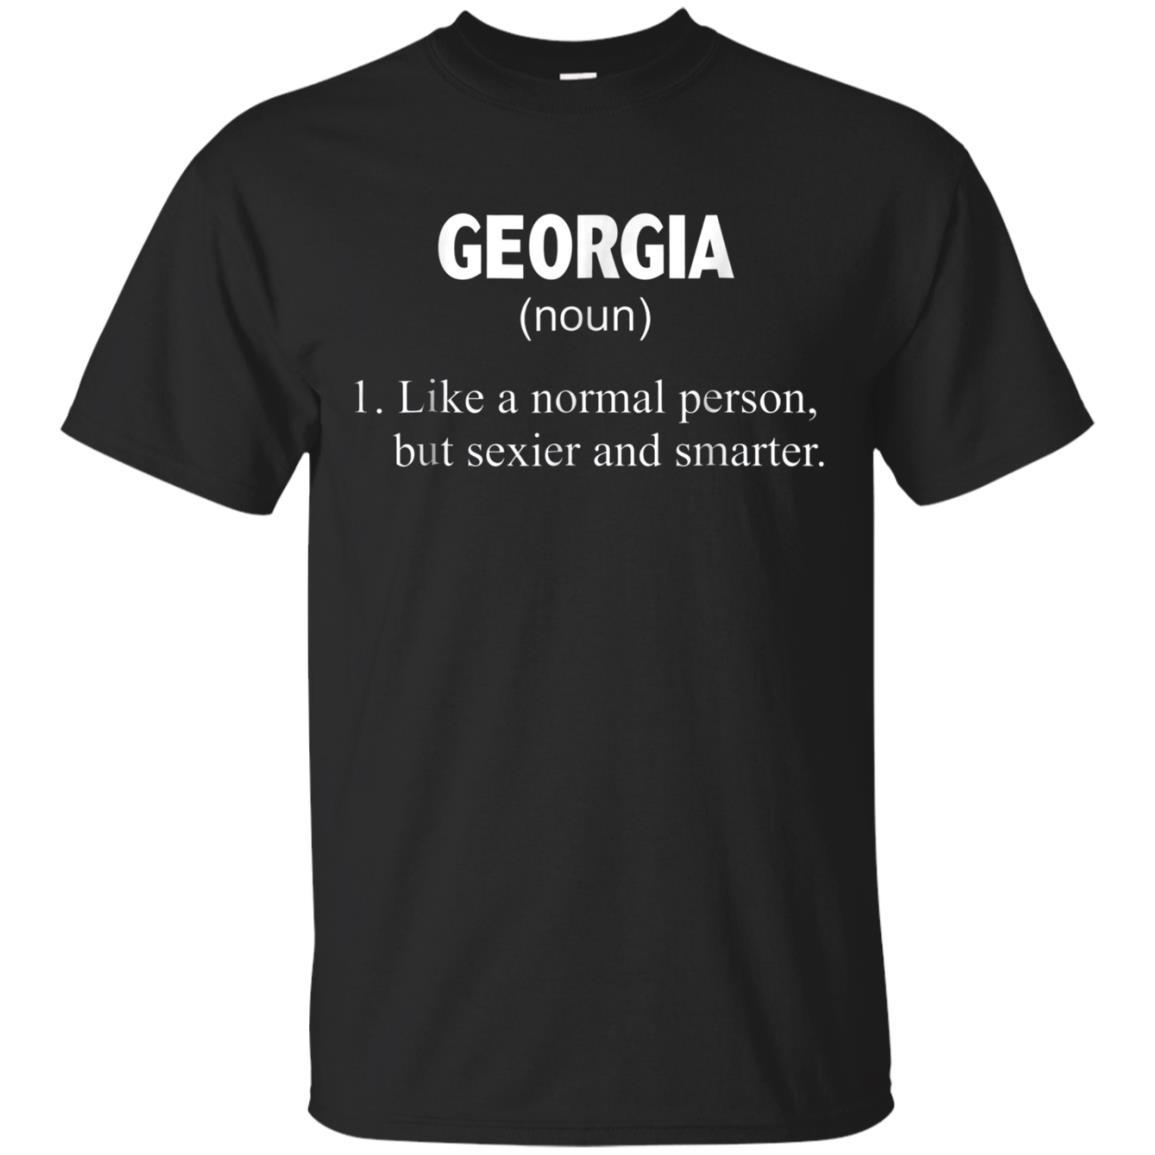 Georgia Definition T-shirt - Funny Definition Idea Shirt